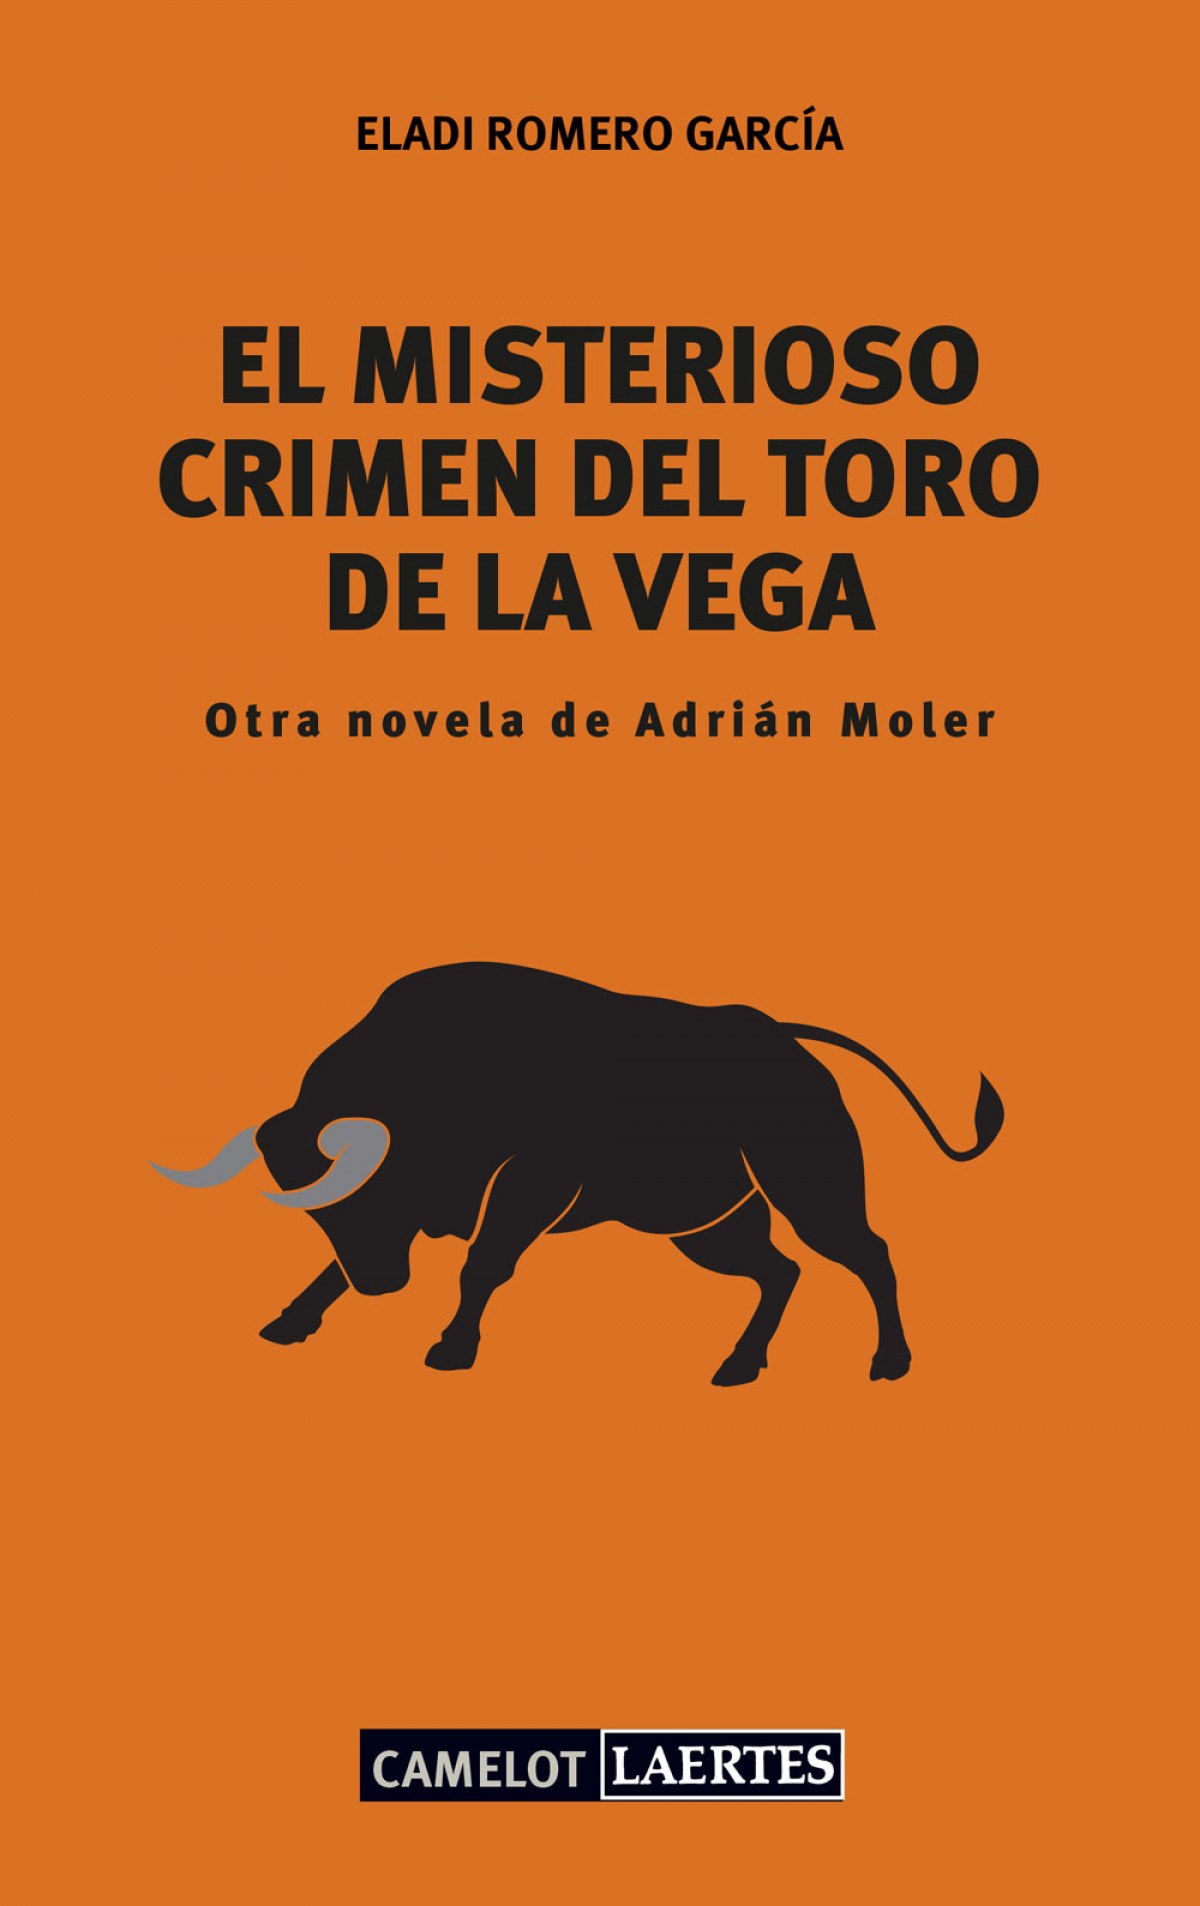 El misterioso crimen del toro de la vega - Romero García, Eladi